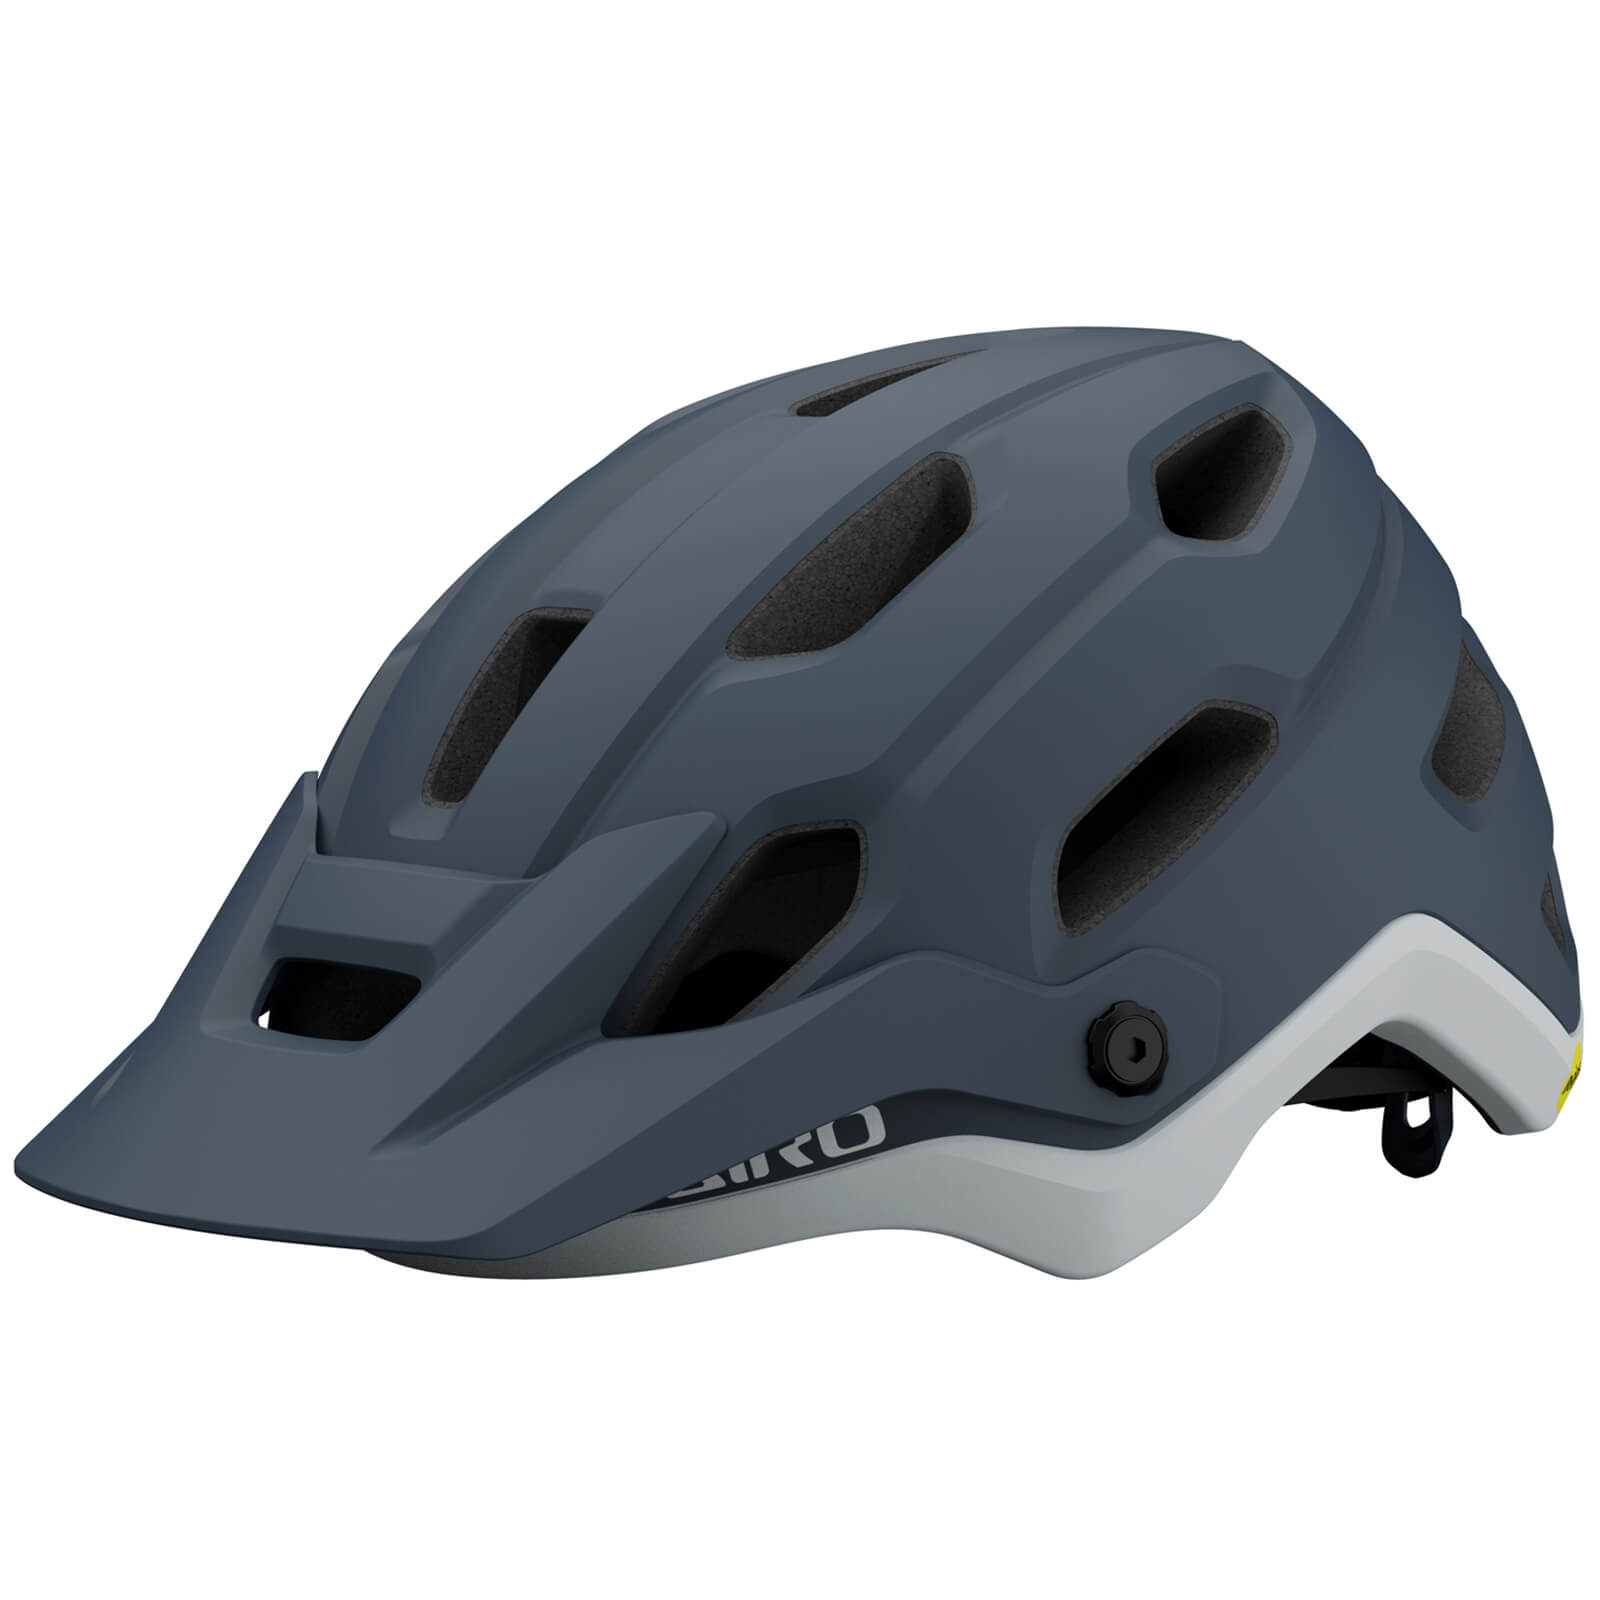 Giro Source MIPS MTB Helmet - L/59-63cm - Portaro Grey